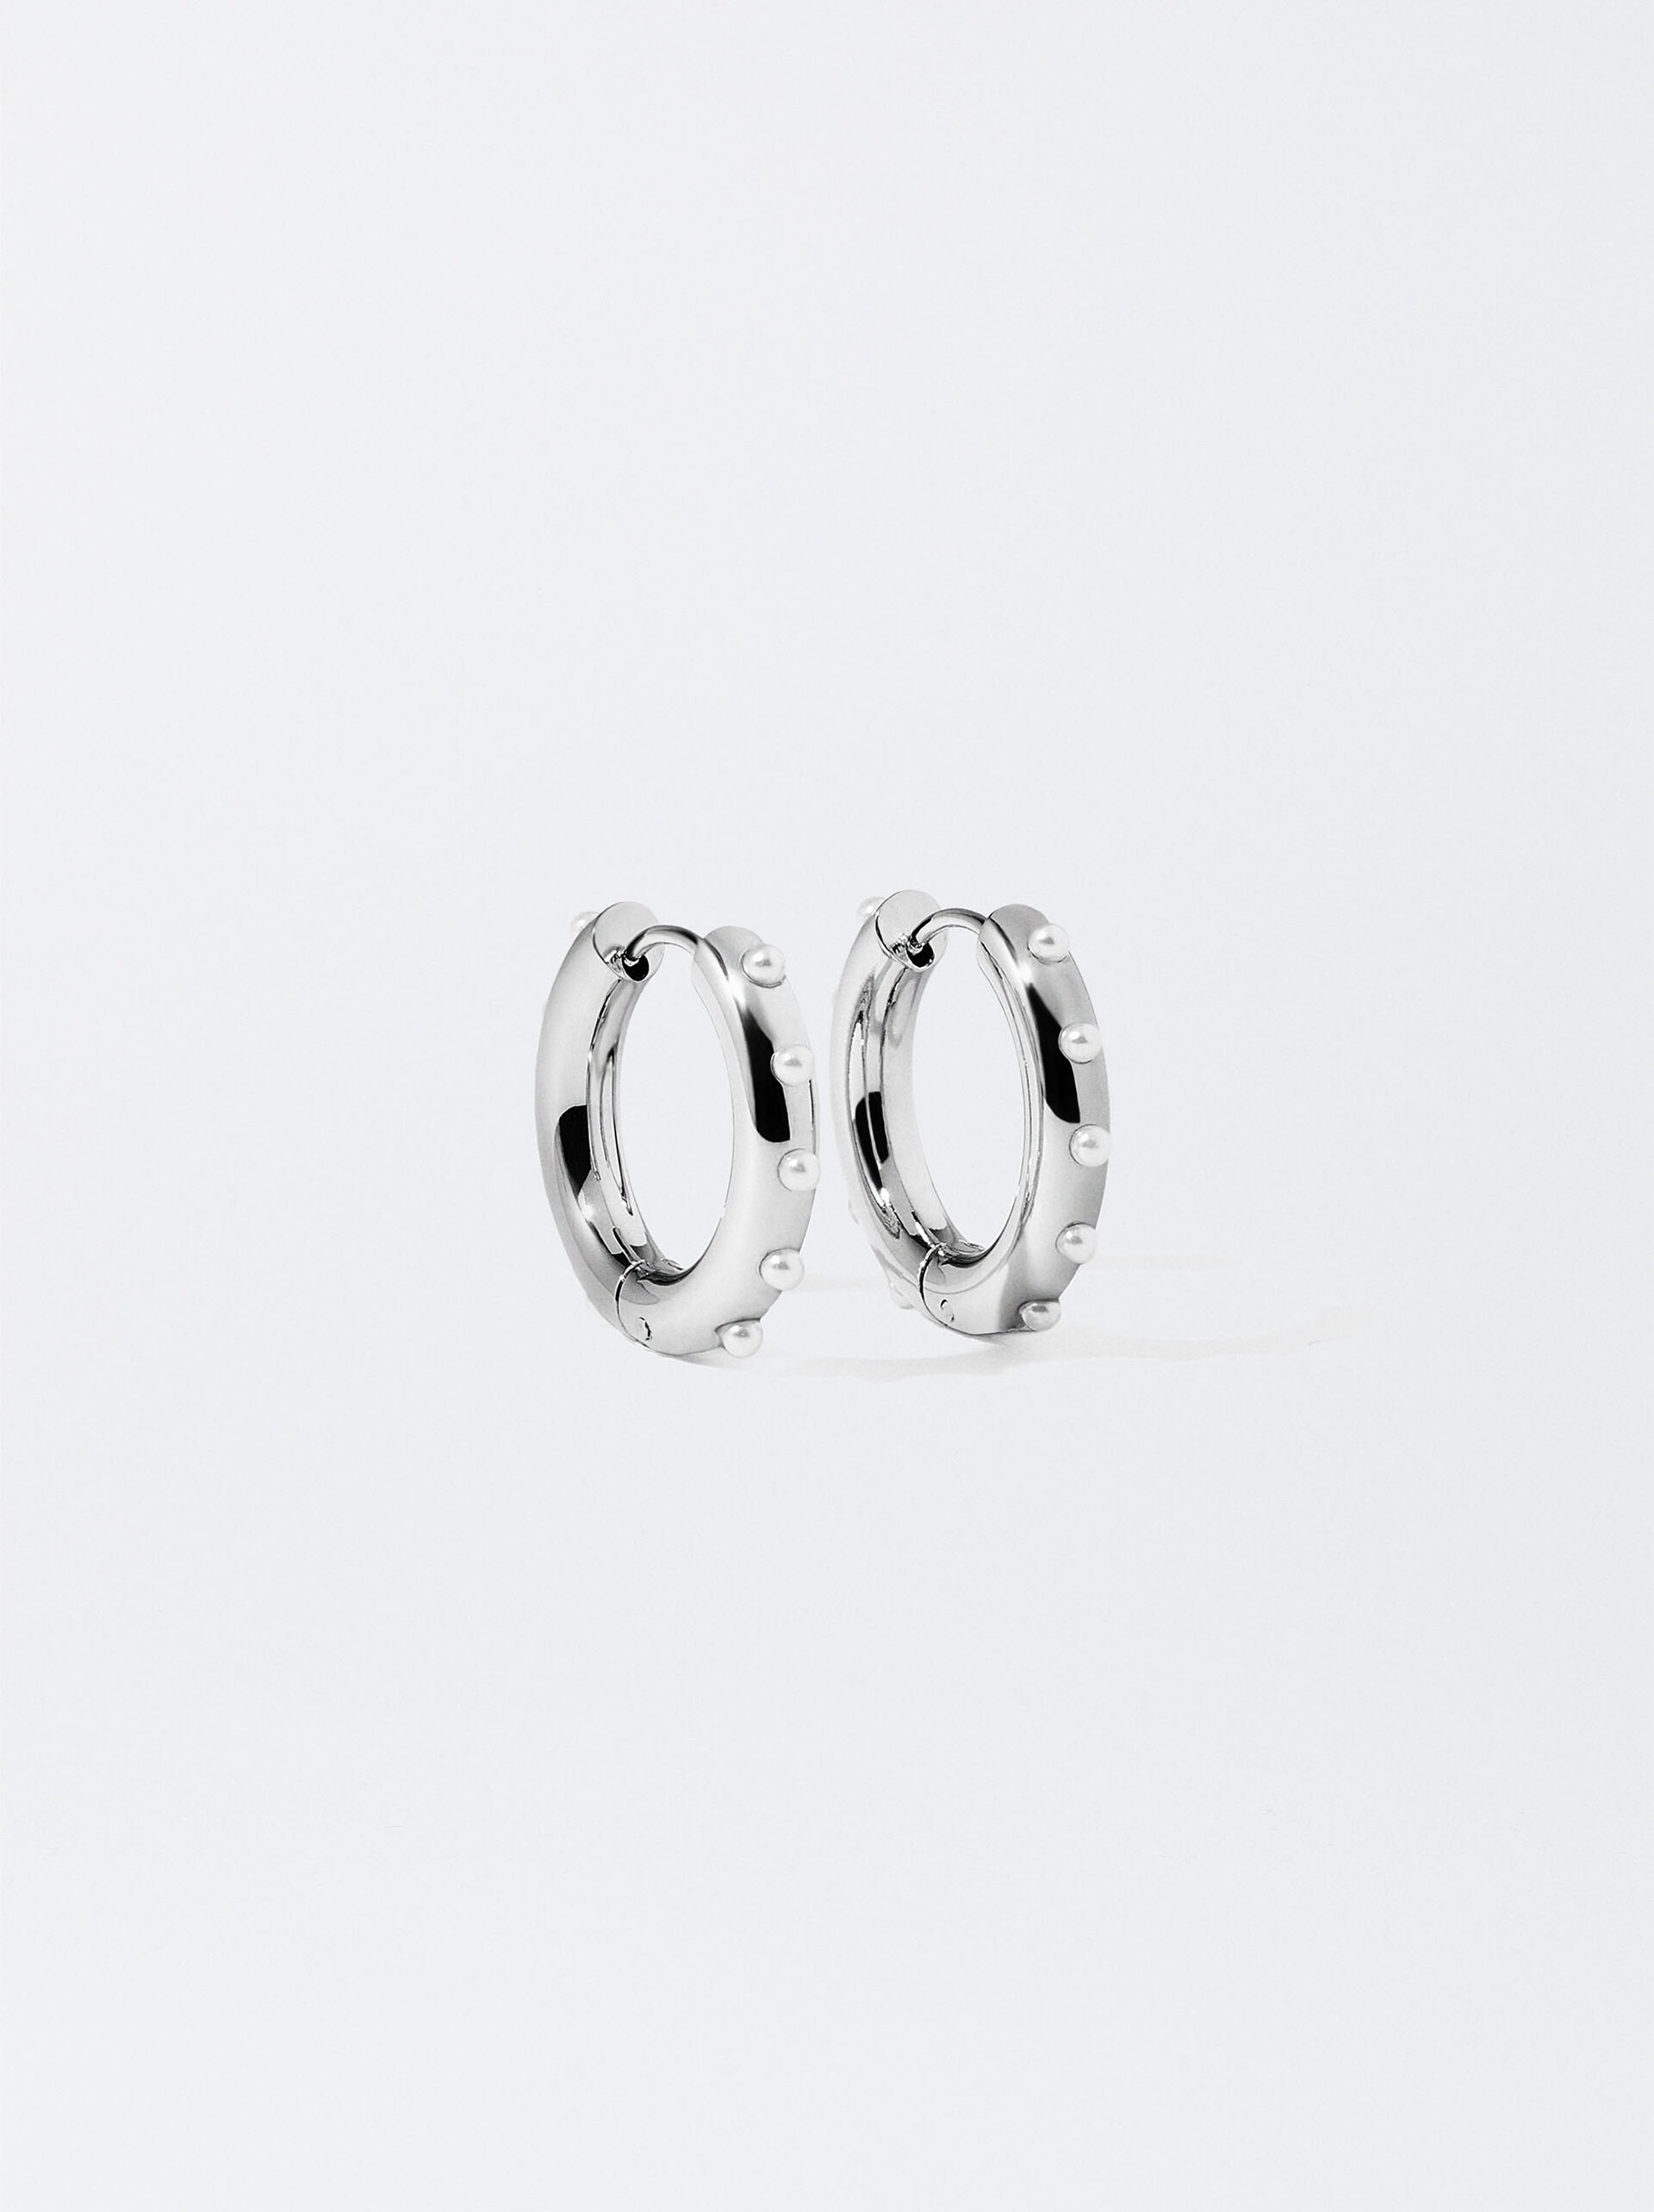 Stainless Steel Hoops Earrings With Pearls image number 0.0